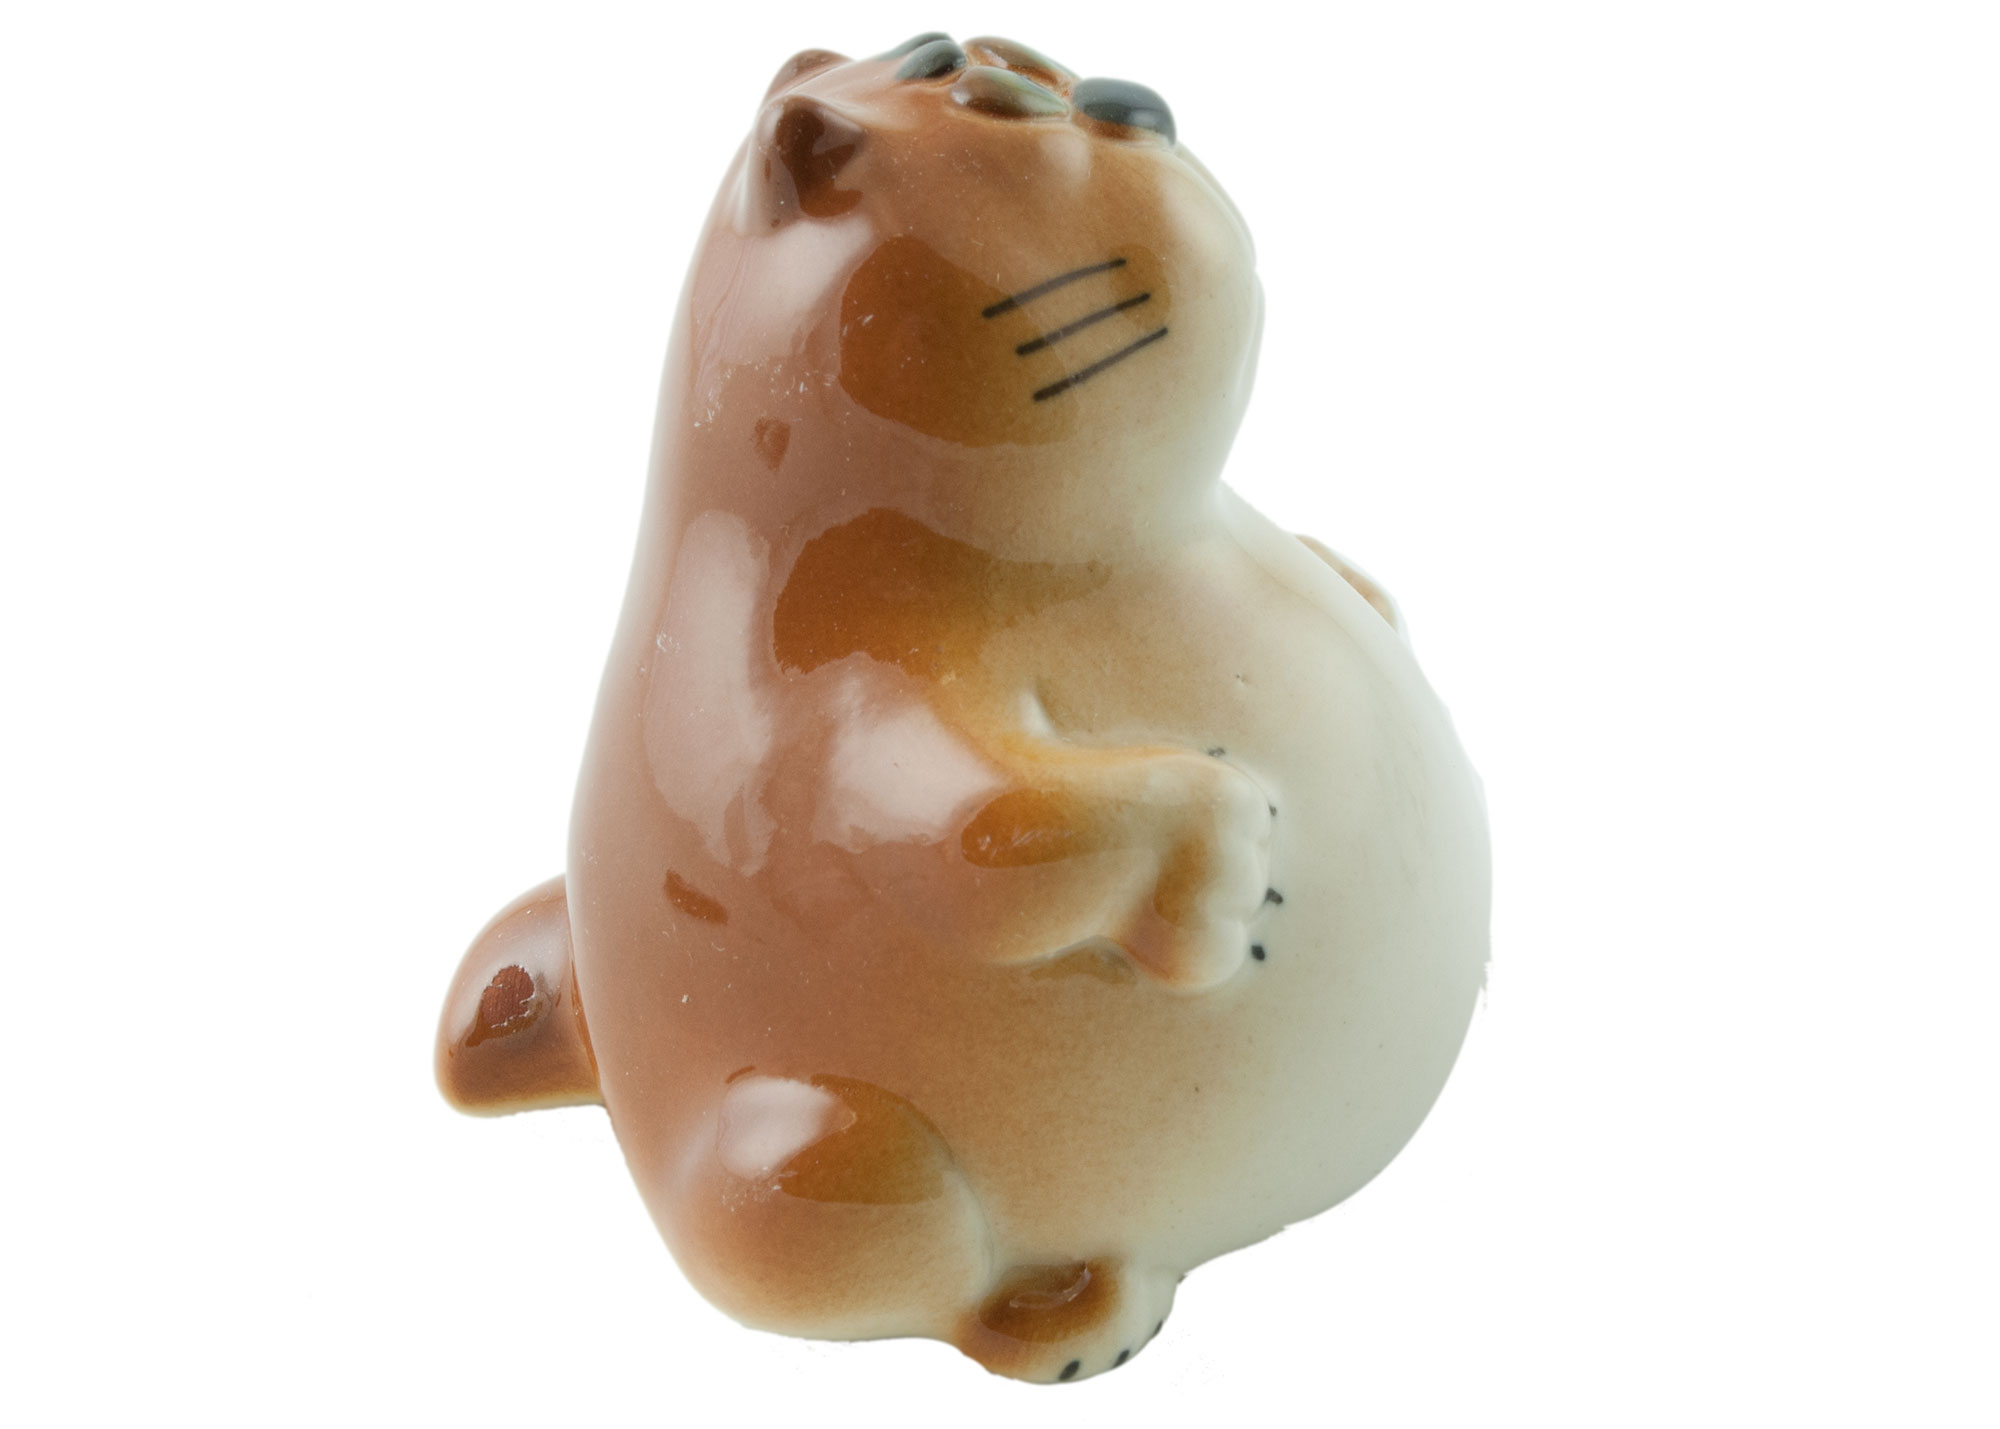 Buy Fat Cat Porcelain Figurine at GoldenCockerel.com